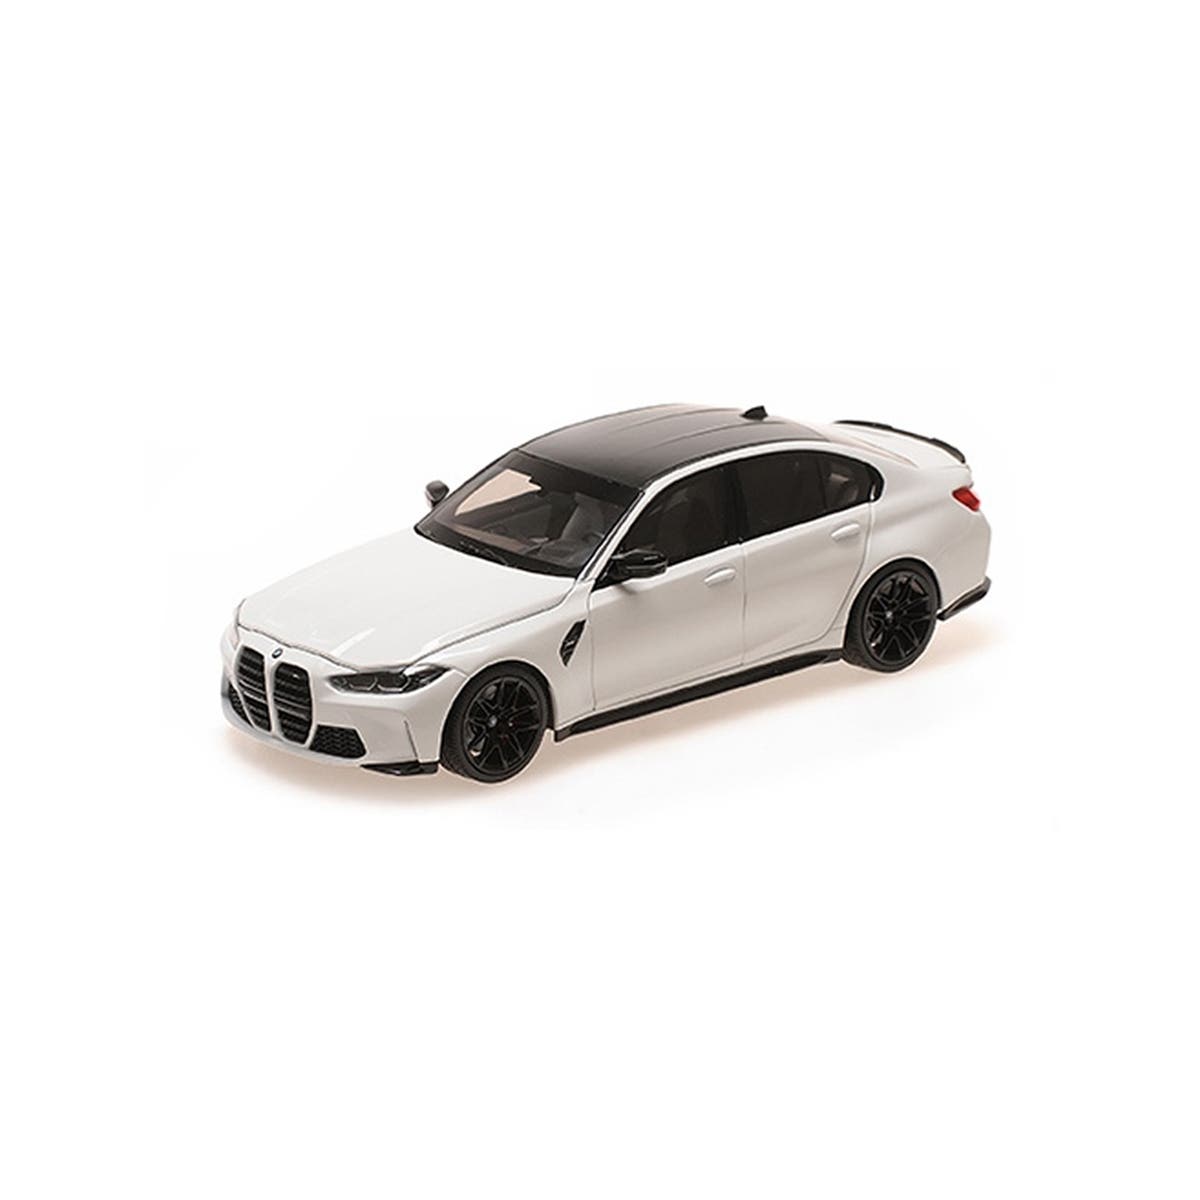 BMW M3 - 2020 - WHITE  - 1:18 Scale Diecast Model Car